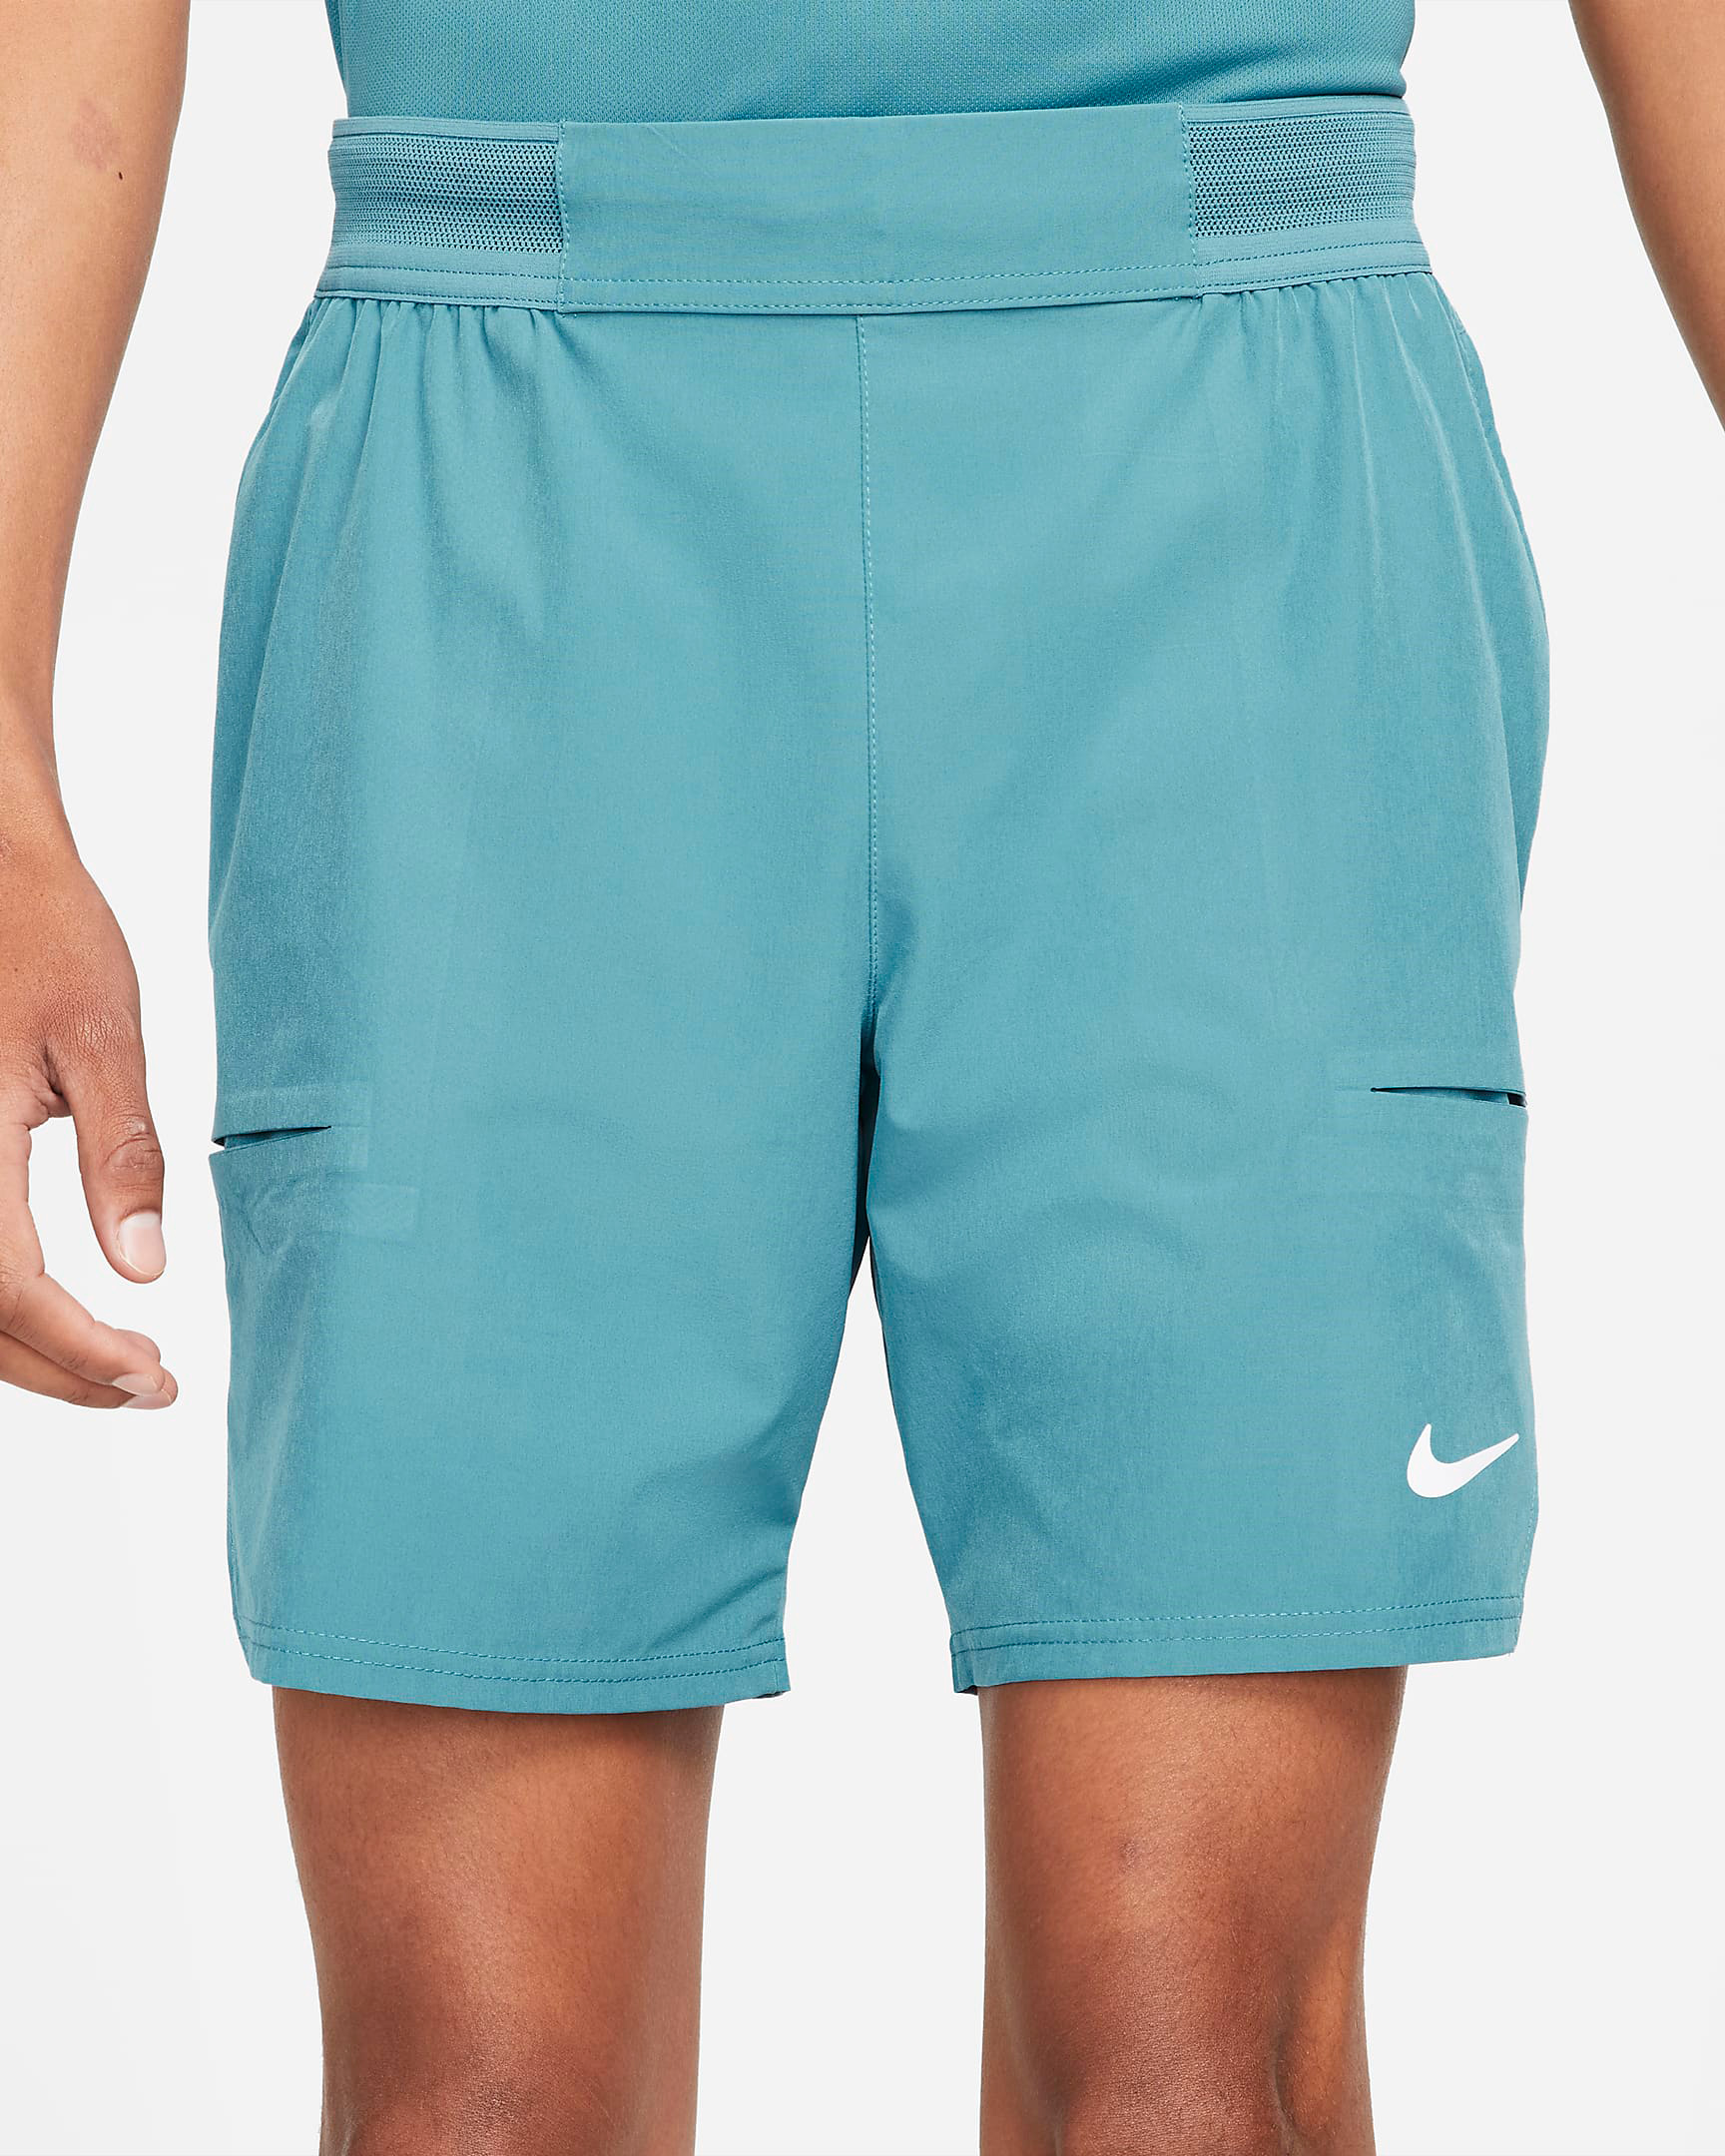 nike-rift-blue-tennis-shirt-shorts-2